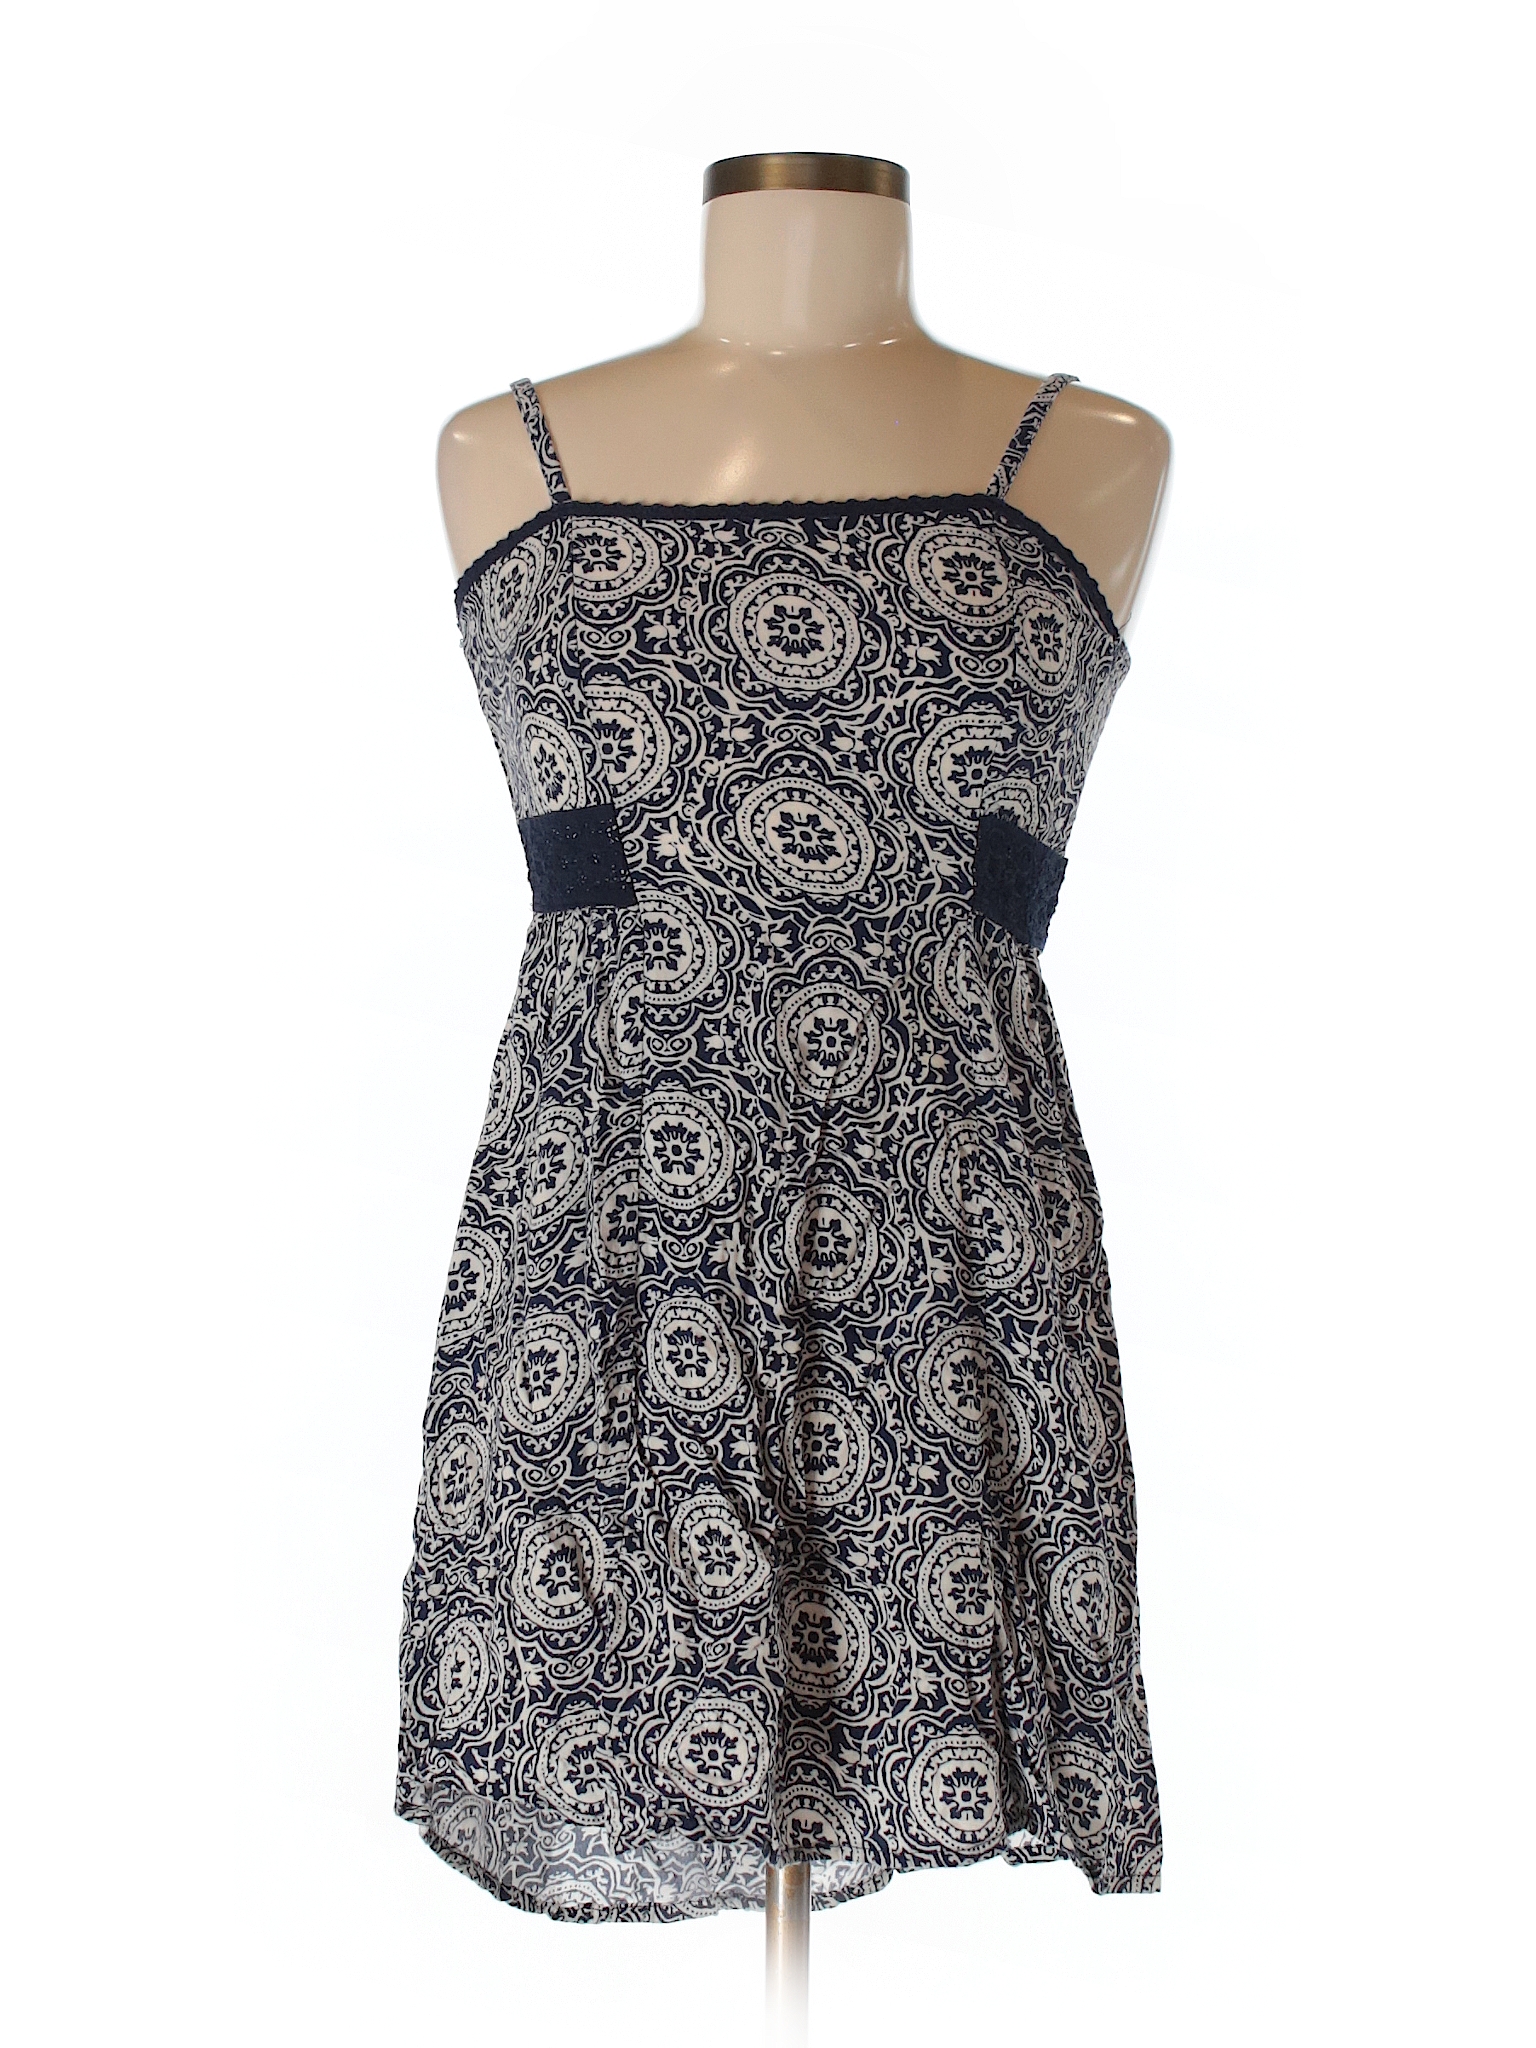 Mossimo 100% Rayon Print Dark Blue Casual Dress Size M - 66% off | thredUP